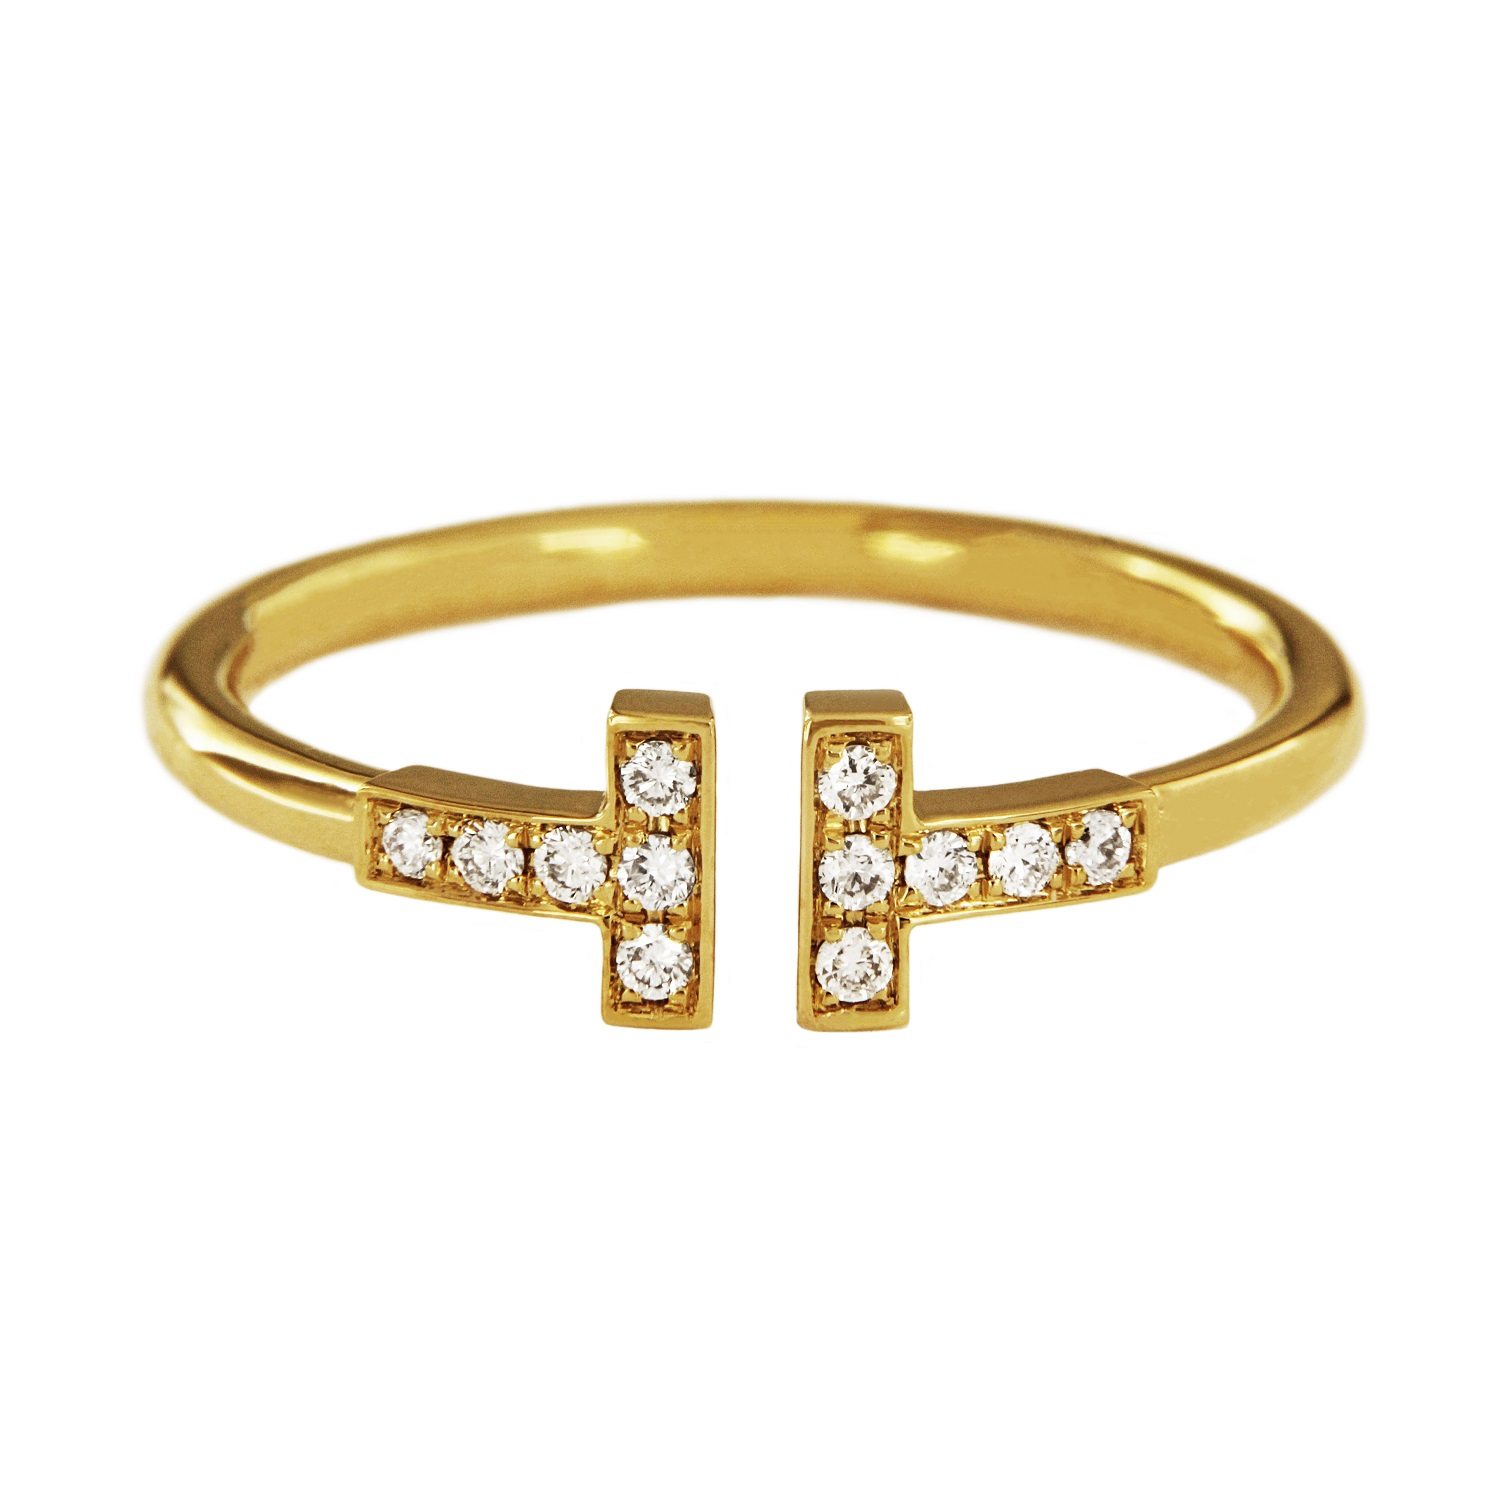 Image of Tiffany & Co. 18k Yellow Gold Diamond Ring